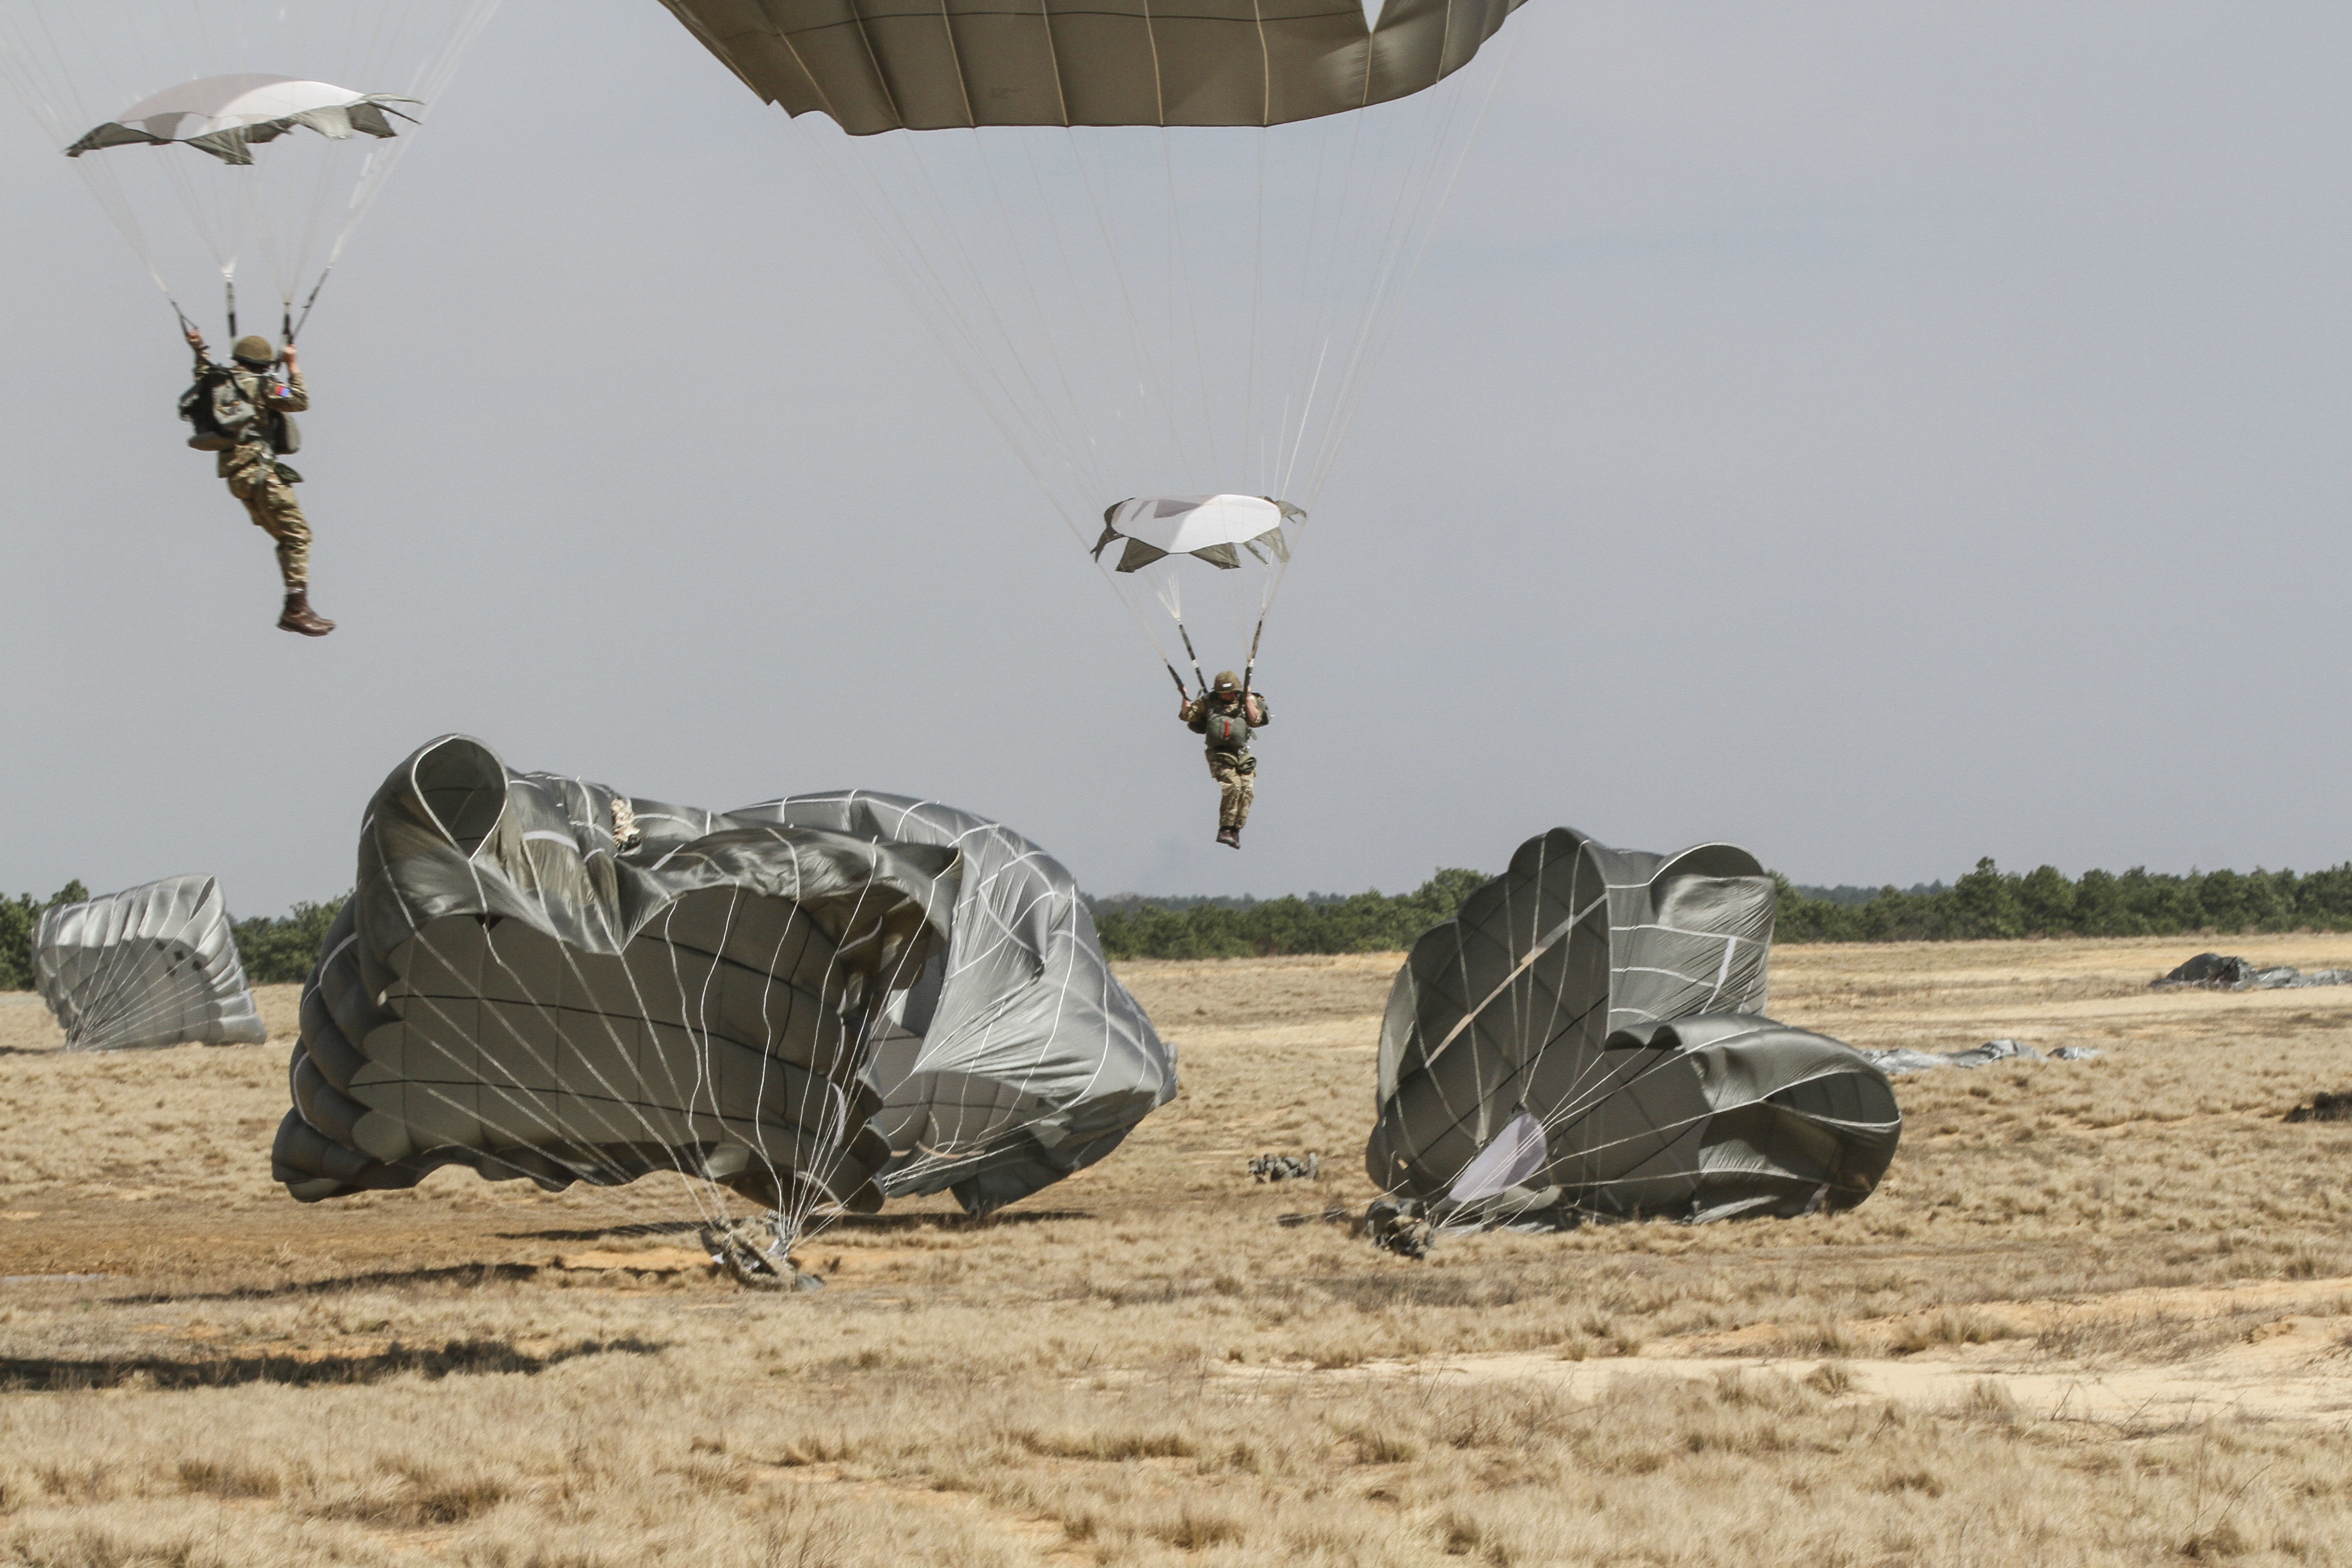 British invasion: Huge paratrooper jump today over Bragg